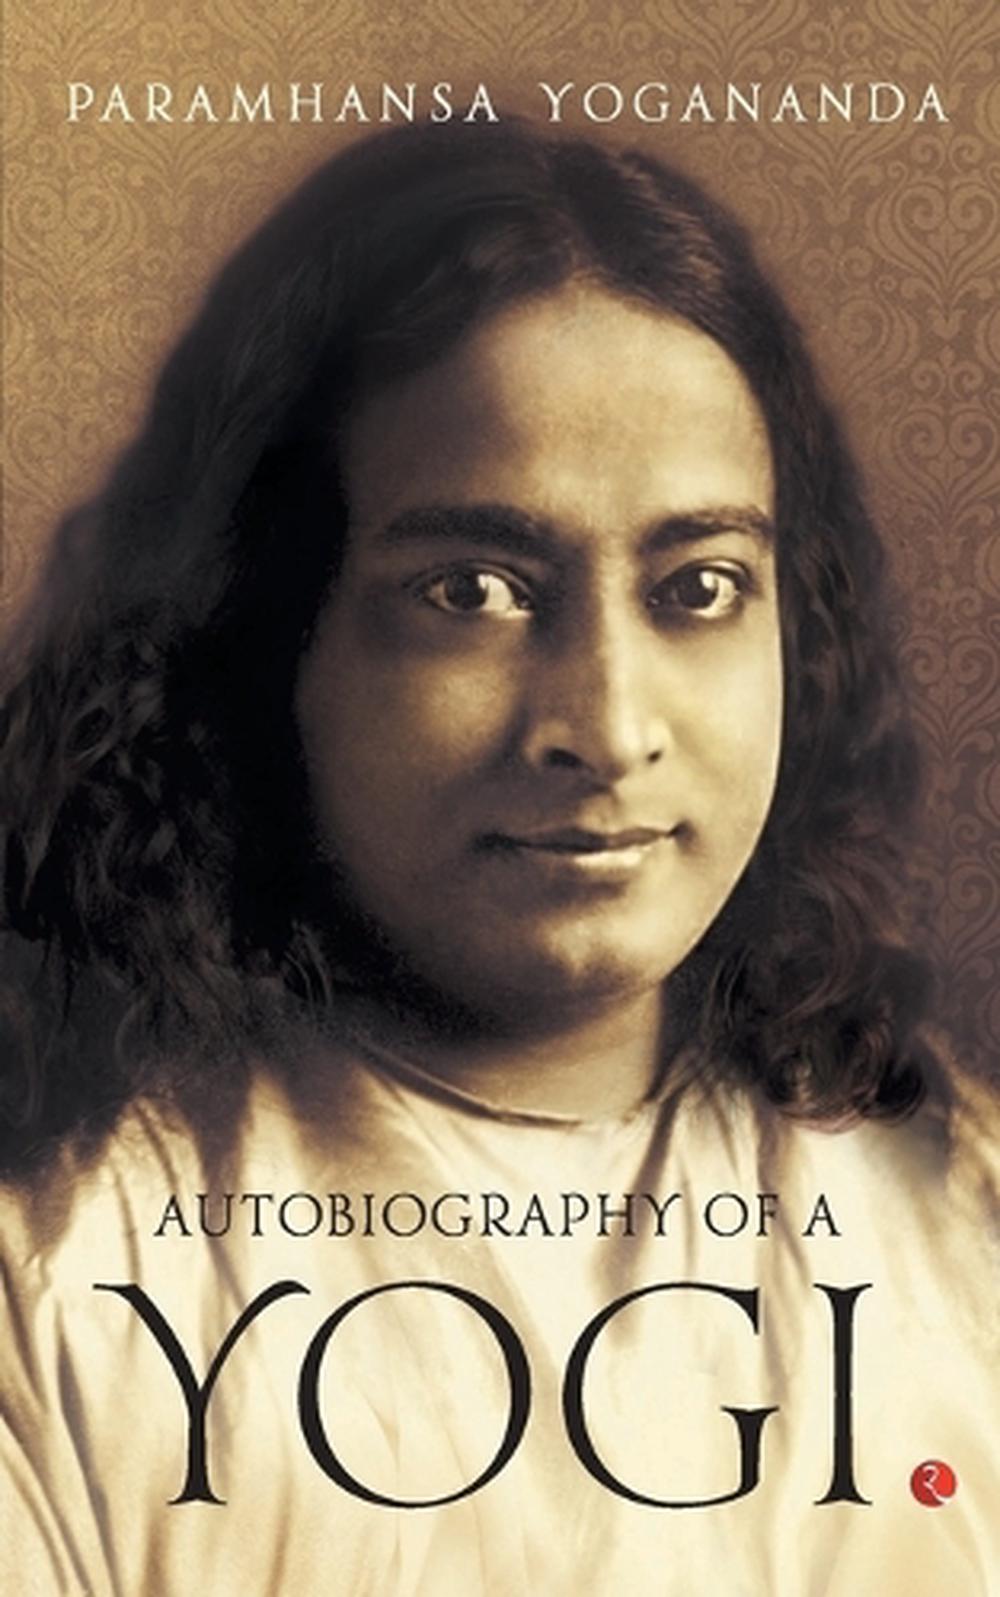 autobiography of a yogi book